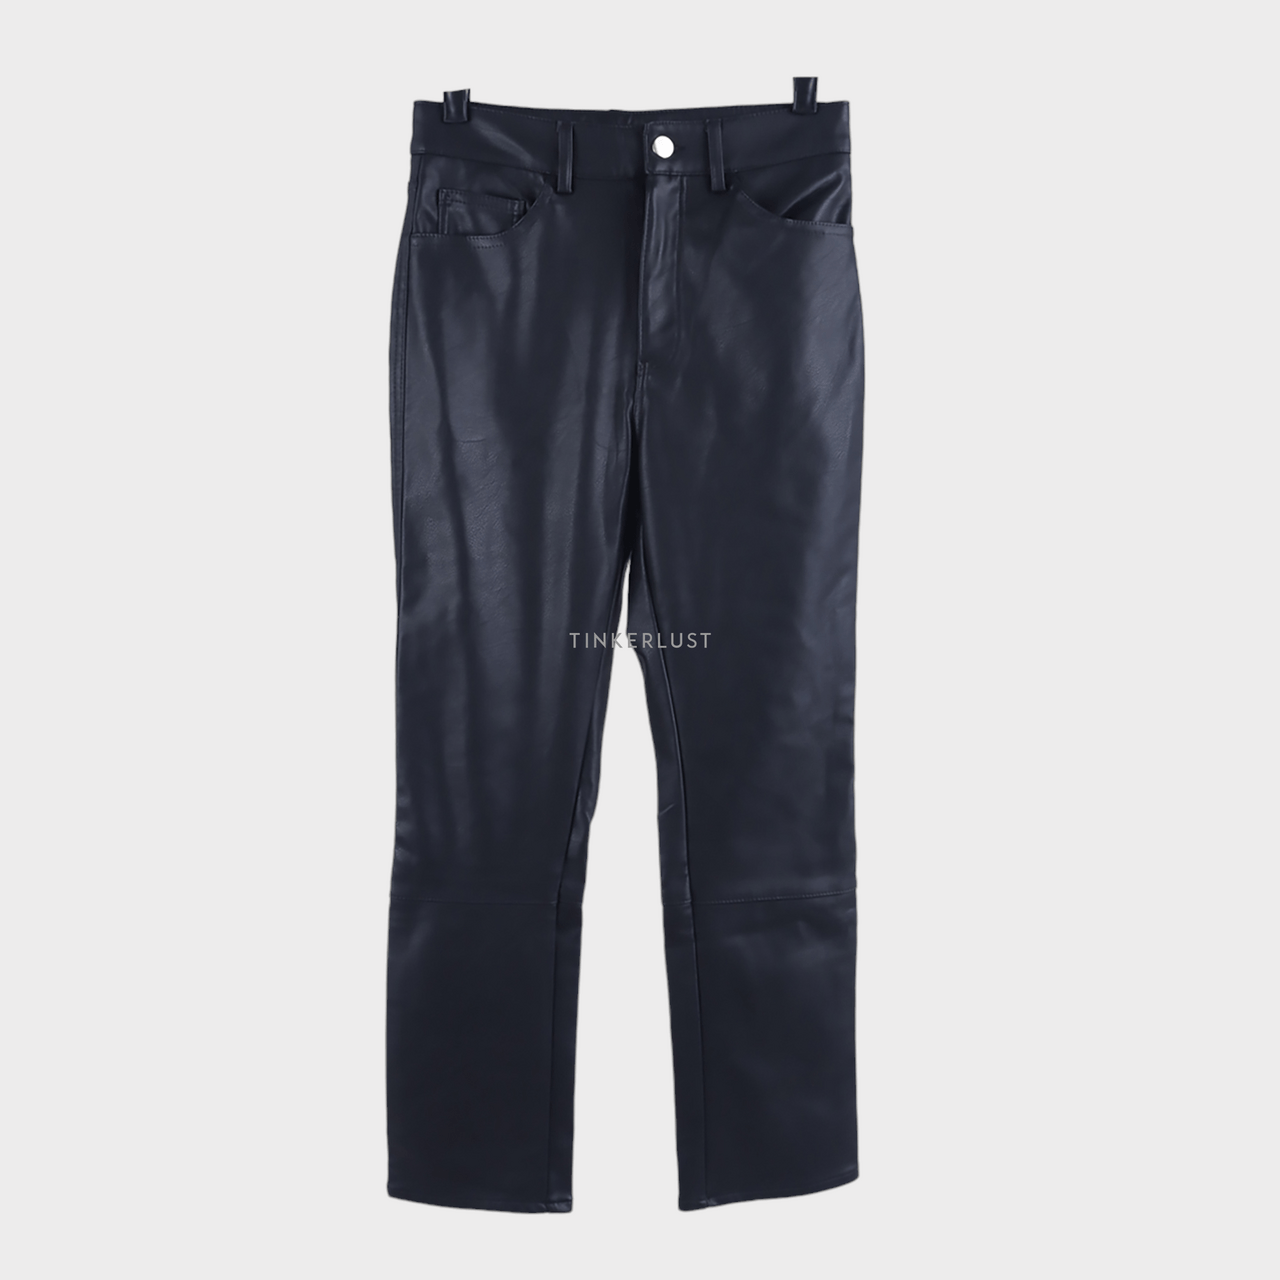 H&M Black Leather Long Pants